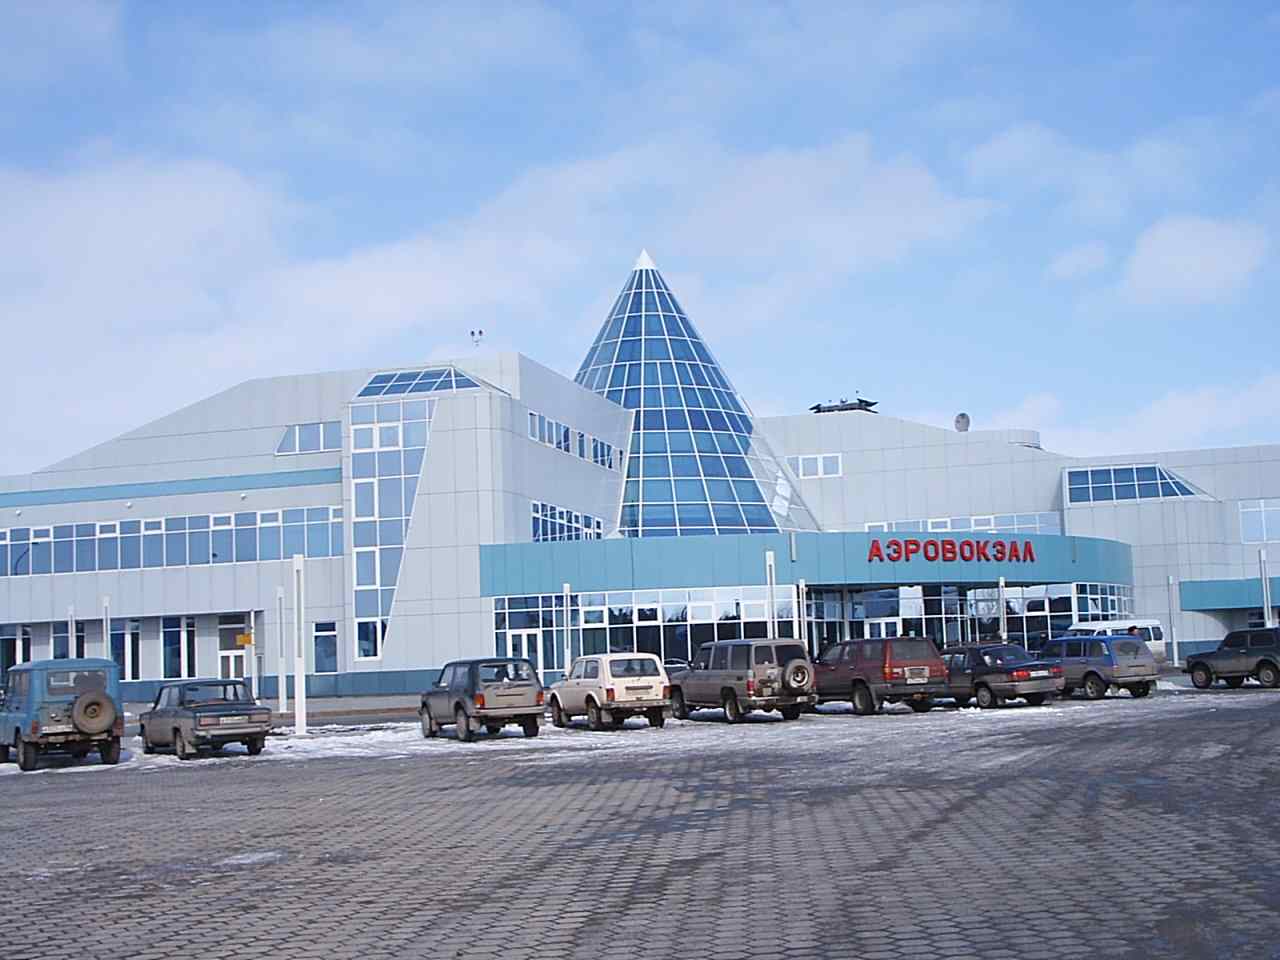 Аеропорт Ханти-Мансійськ (Khanty-Mansiysk Airport)